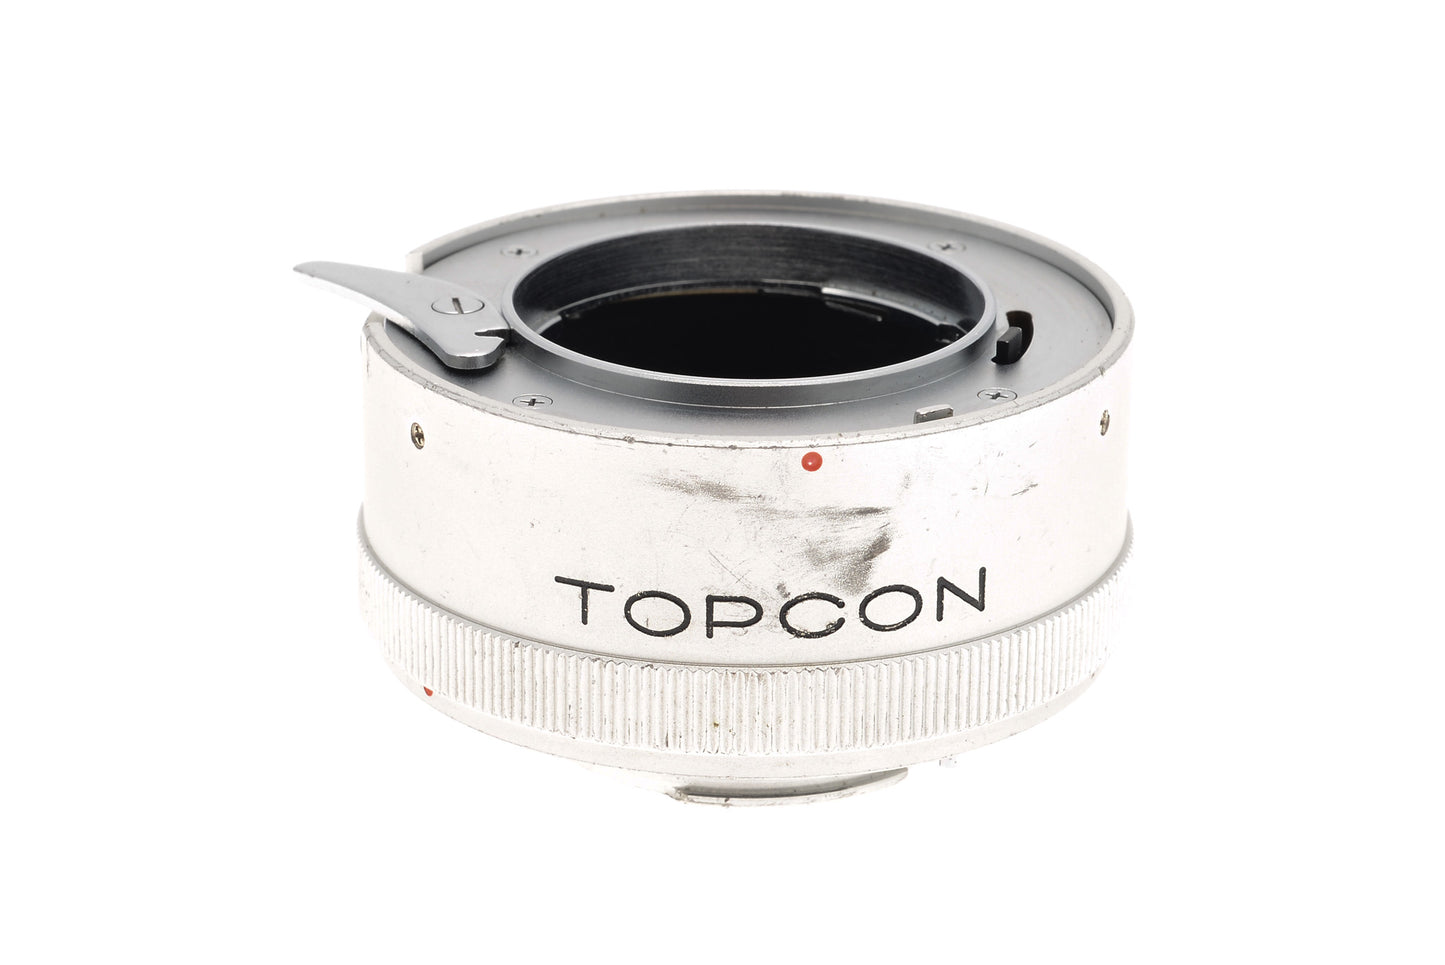 Topcon 27mm Automatic Extension Tube - Accessory